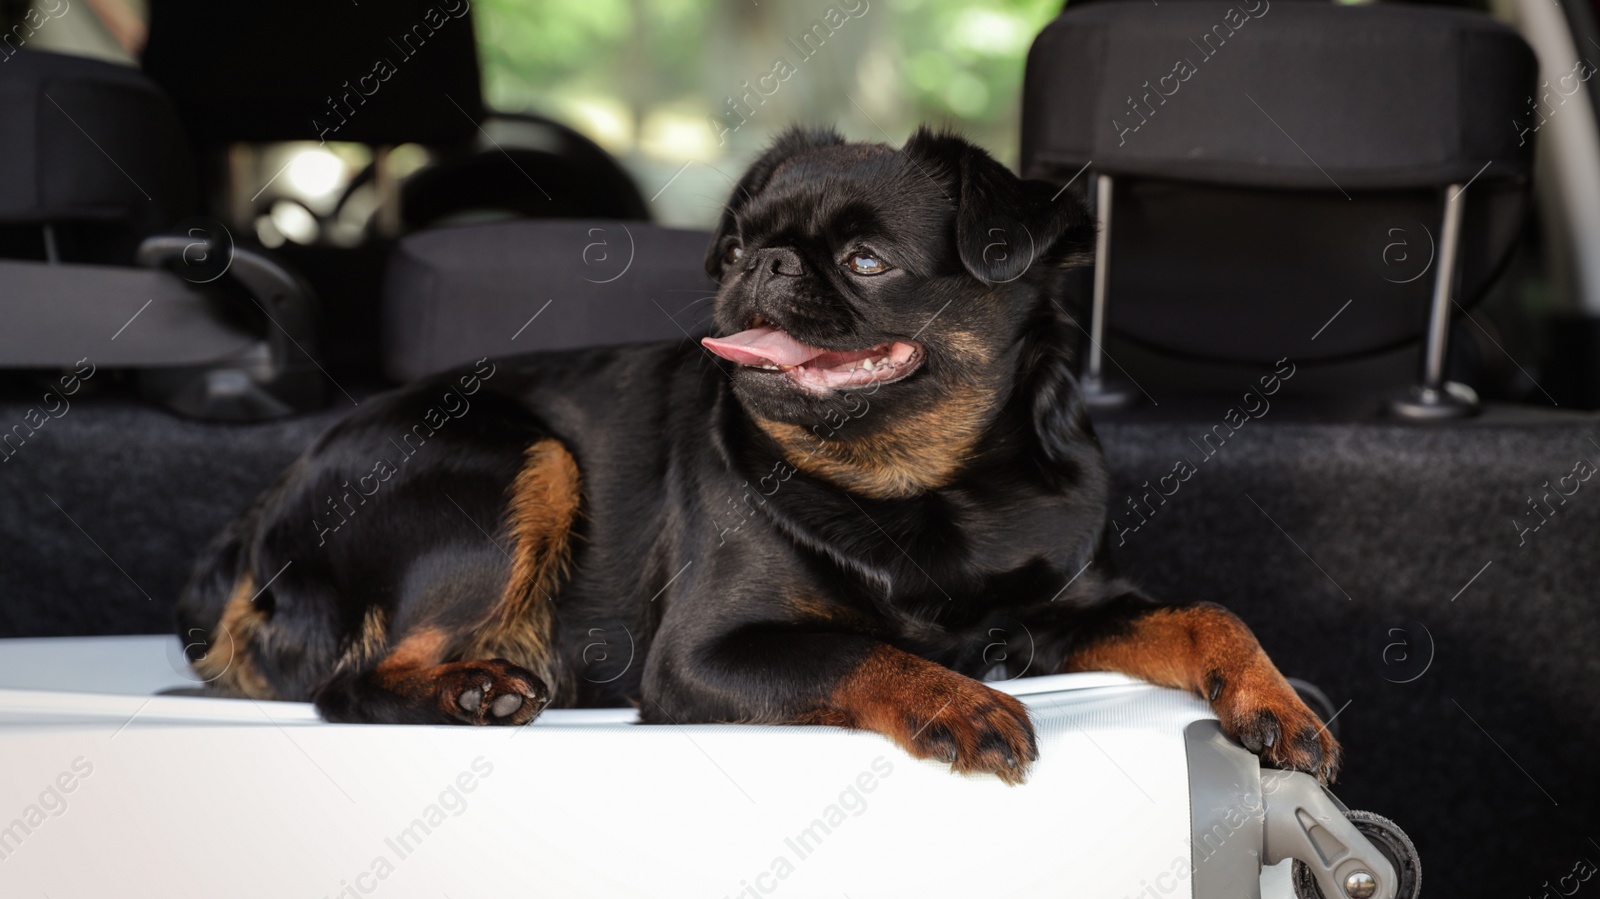 Photo of Cute Petit Brabancon dog lying on suitcase in car trunk